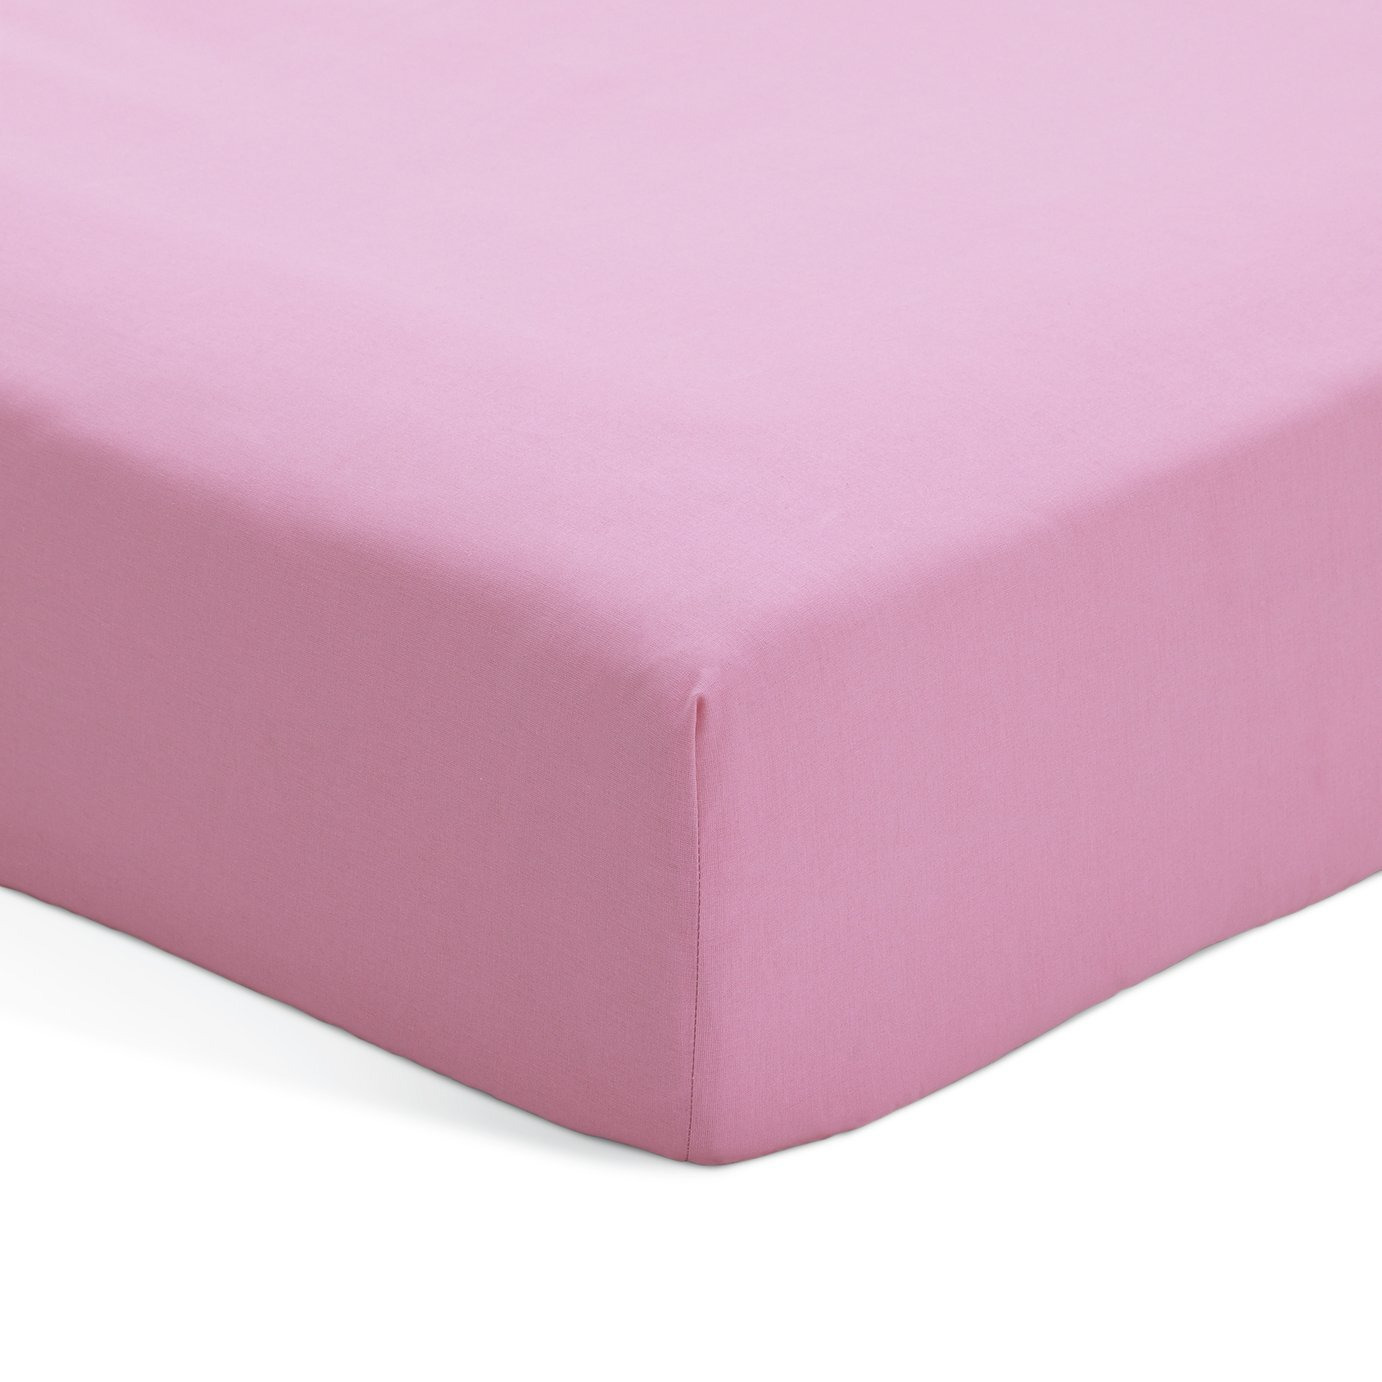 Habitat Polycotton Pink Fitted Sheet - King size - image 1